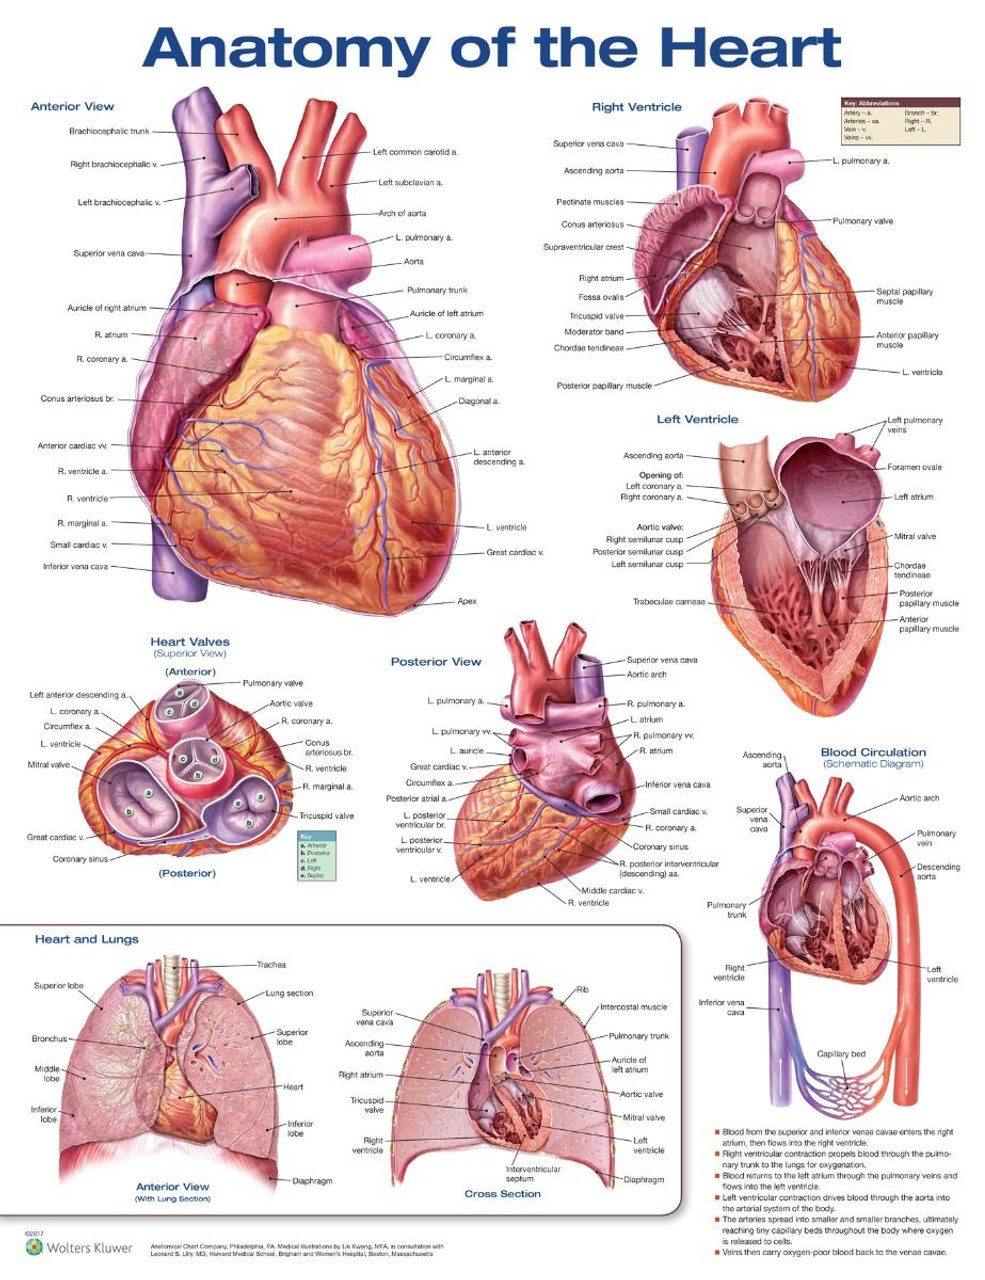 Anatomy of the Heart 3rd ed